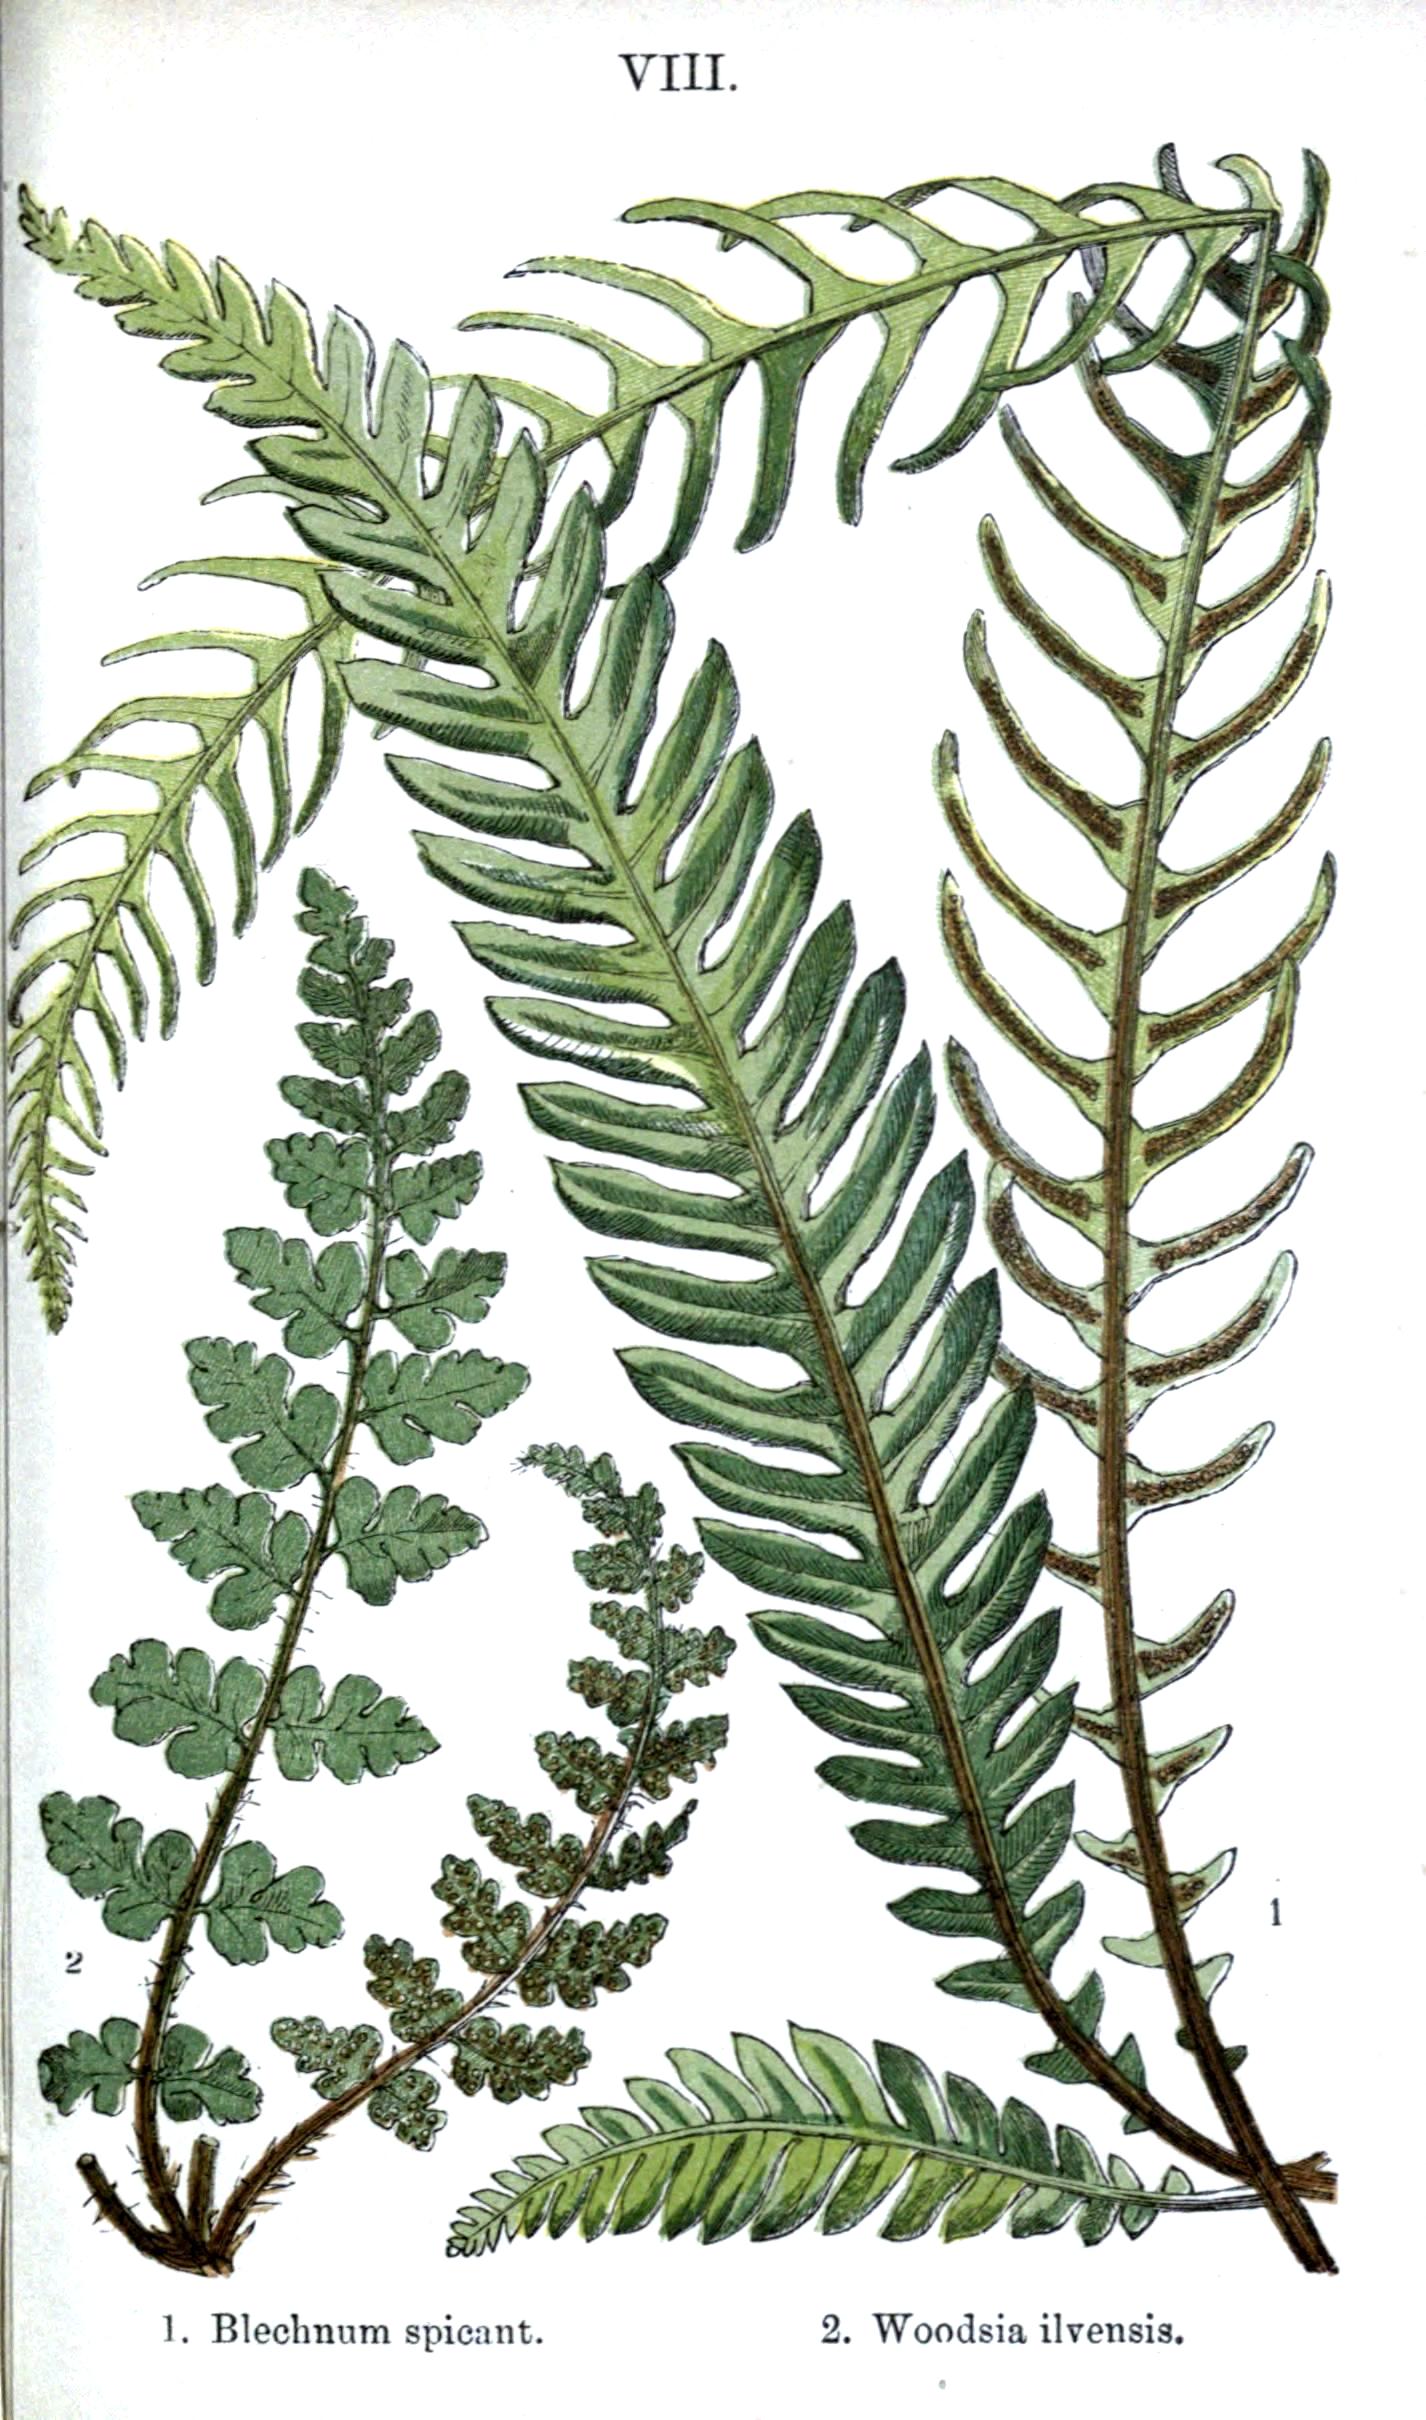 fern-botanical-drawing-at-getdrawings-free-download